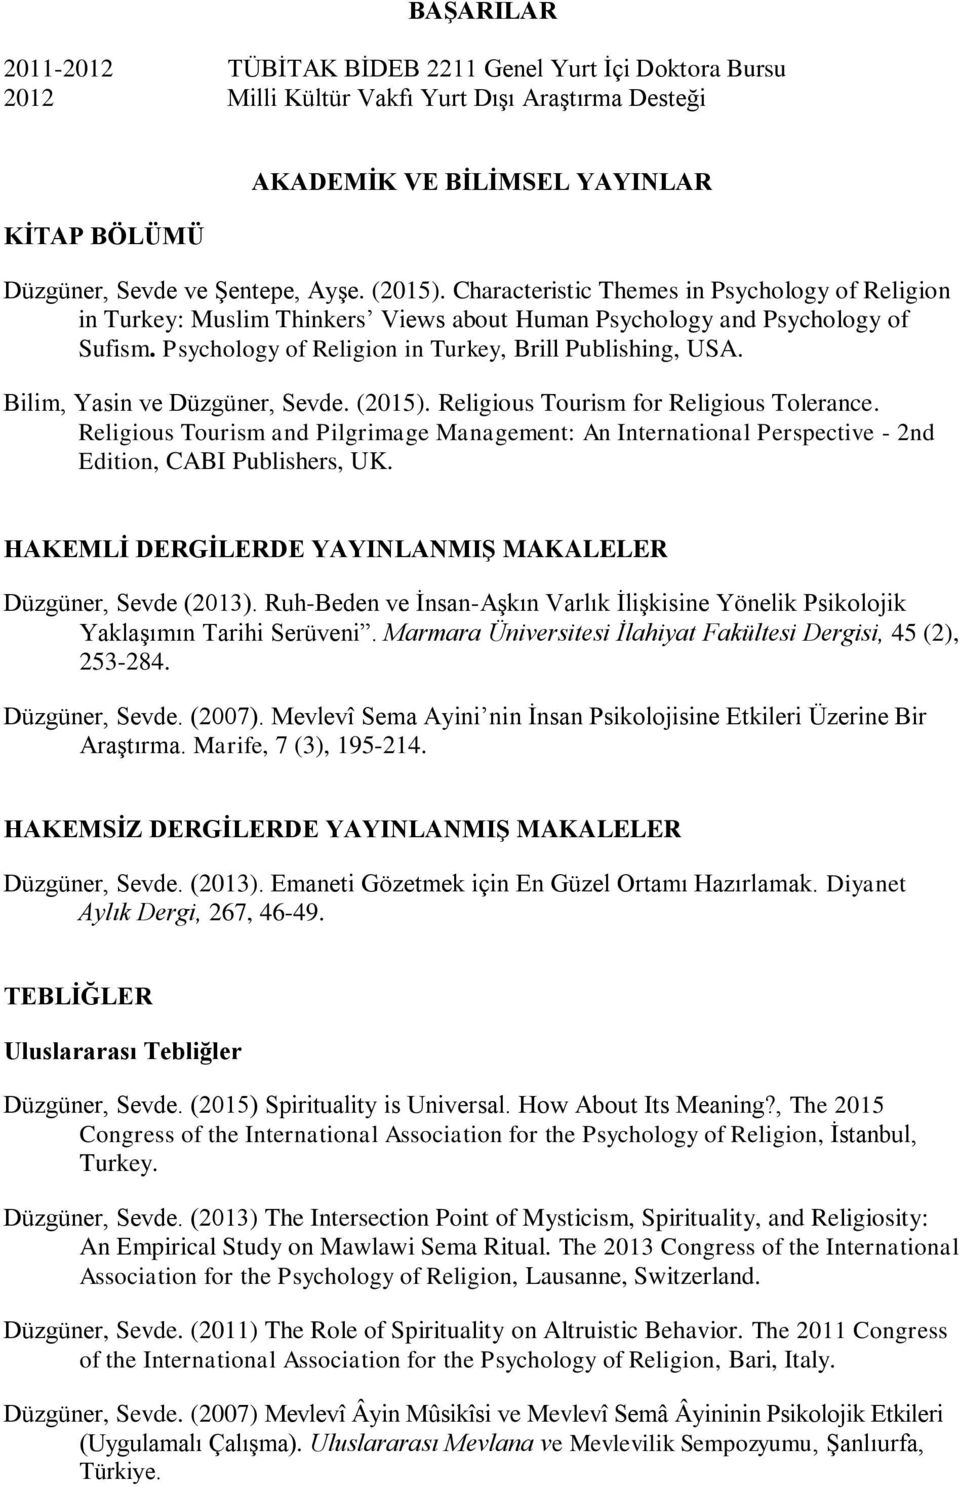 Bilim, Yasin ve Düzgüner, Sevde. (2015). Religious Tourism for Religious Tolerance. Religious Tourism and Pilgrimage Management: An International Perspective - 2nd Edition, CABI Publishers, UK.